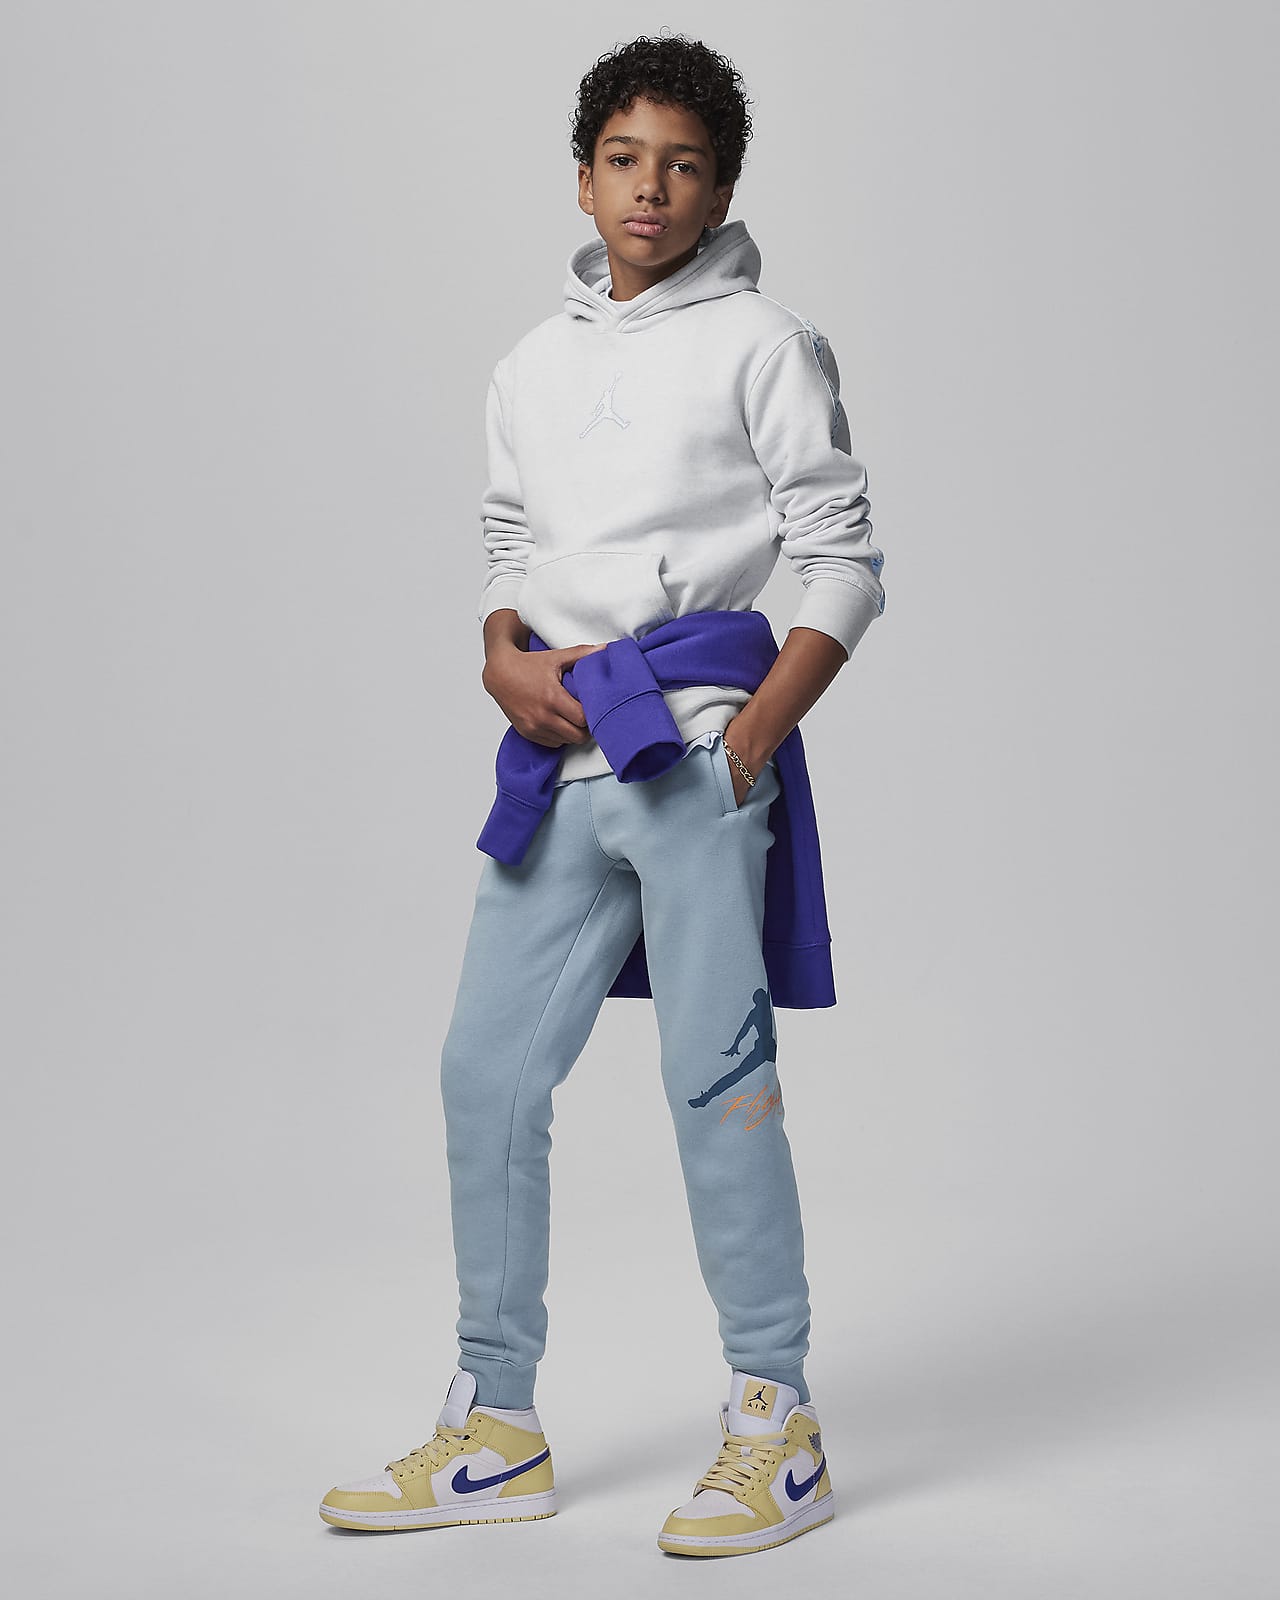 Boys Uniform Regular Active Fleece Knit Jogger Pants 3-Pack